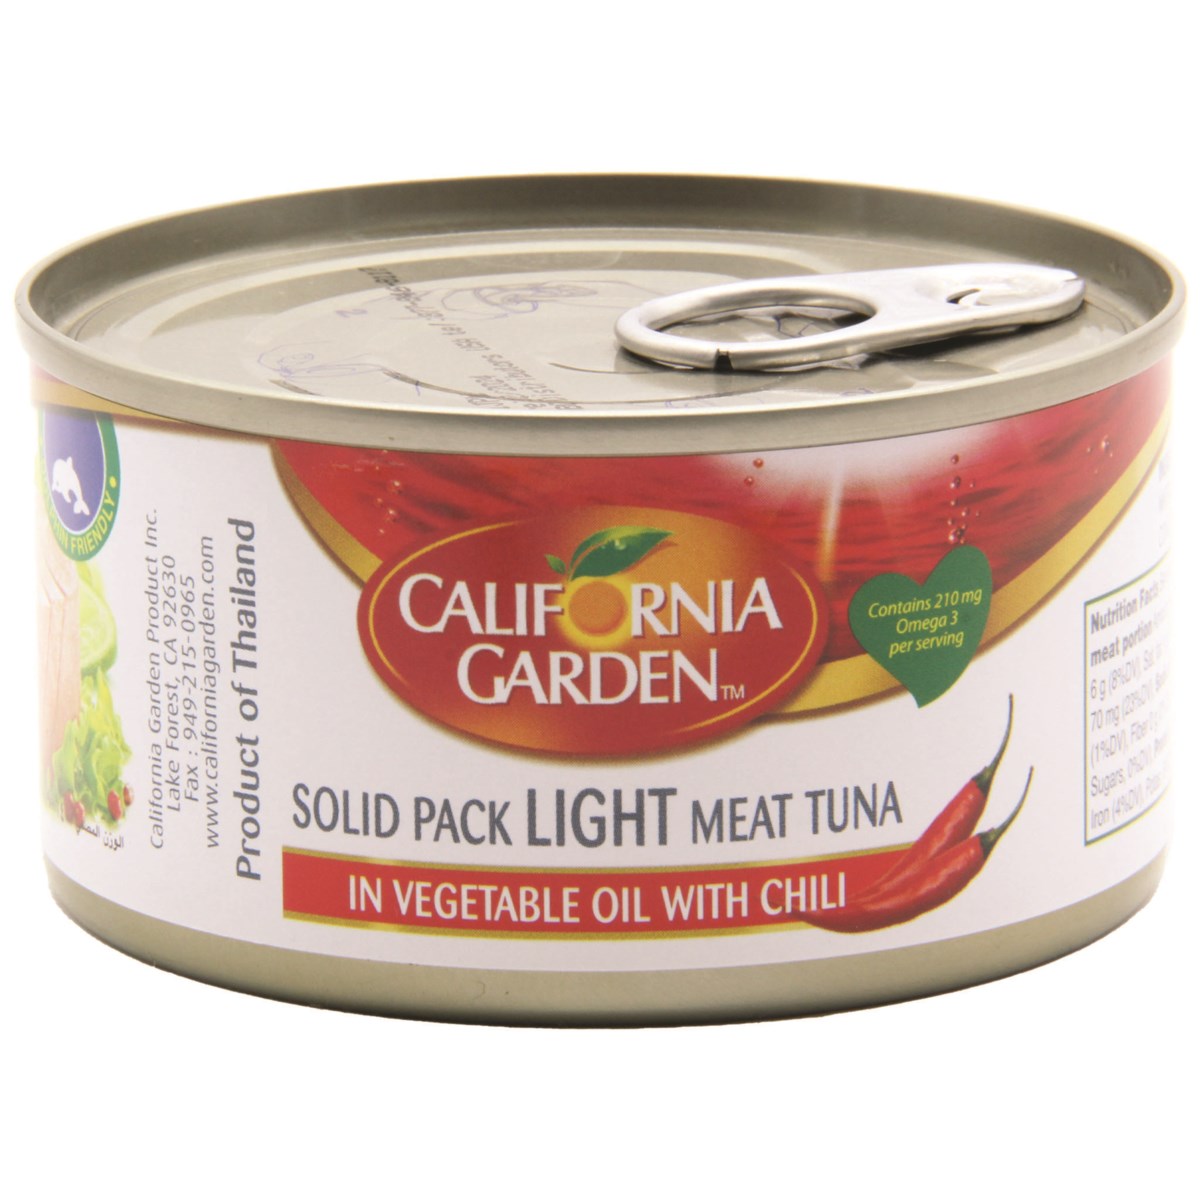 Tuna in Soya Bean Oil with chili "California Garde